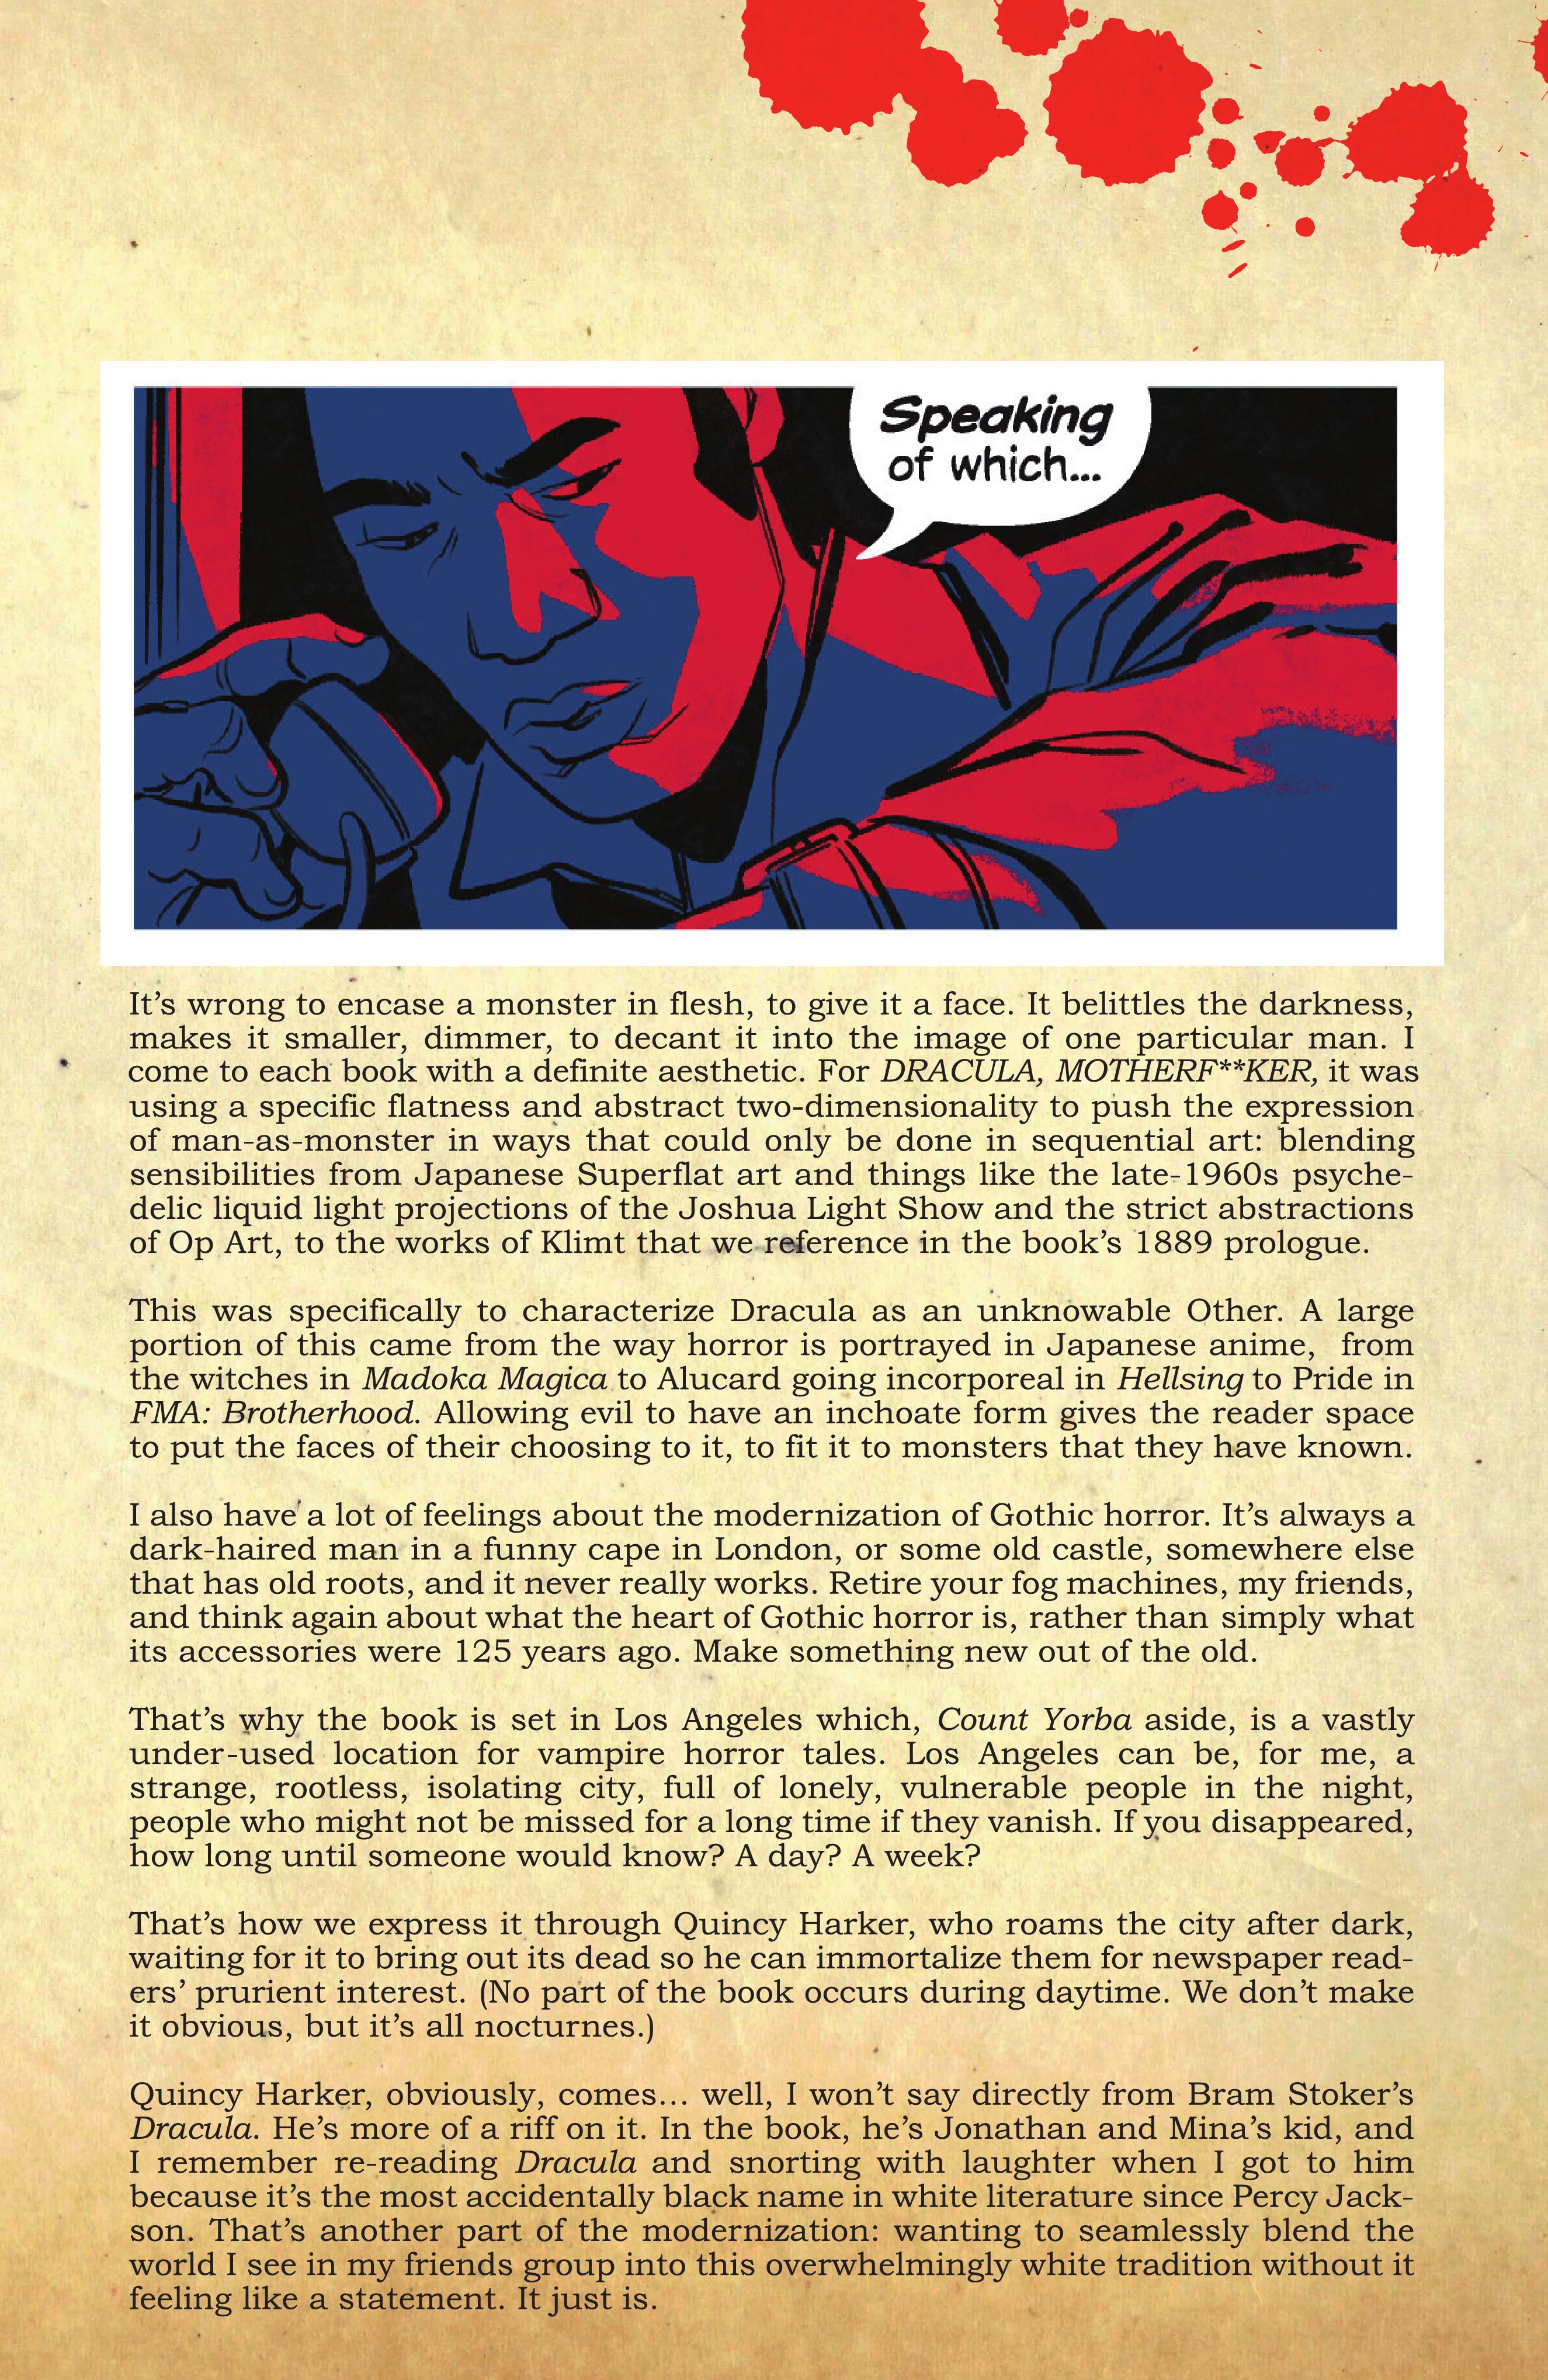 Read online Dracula, Motherf**ker! comic -  Issue # Full - 60